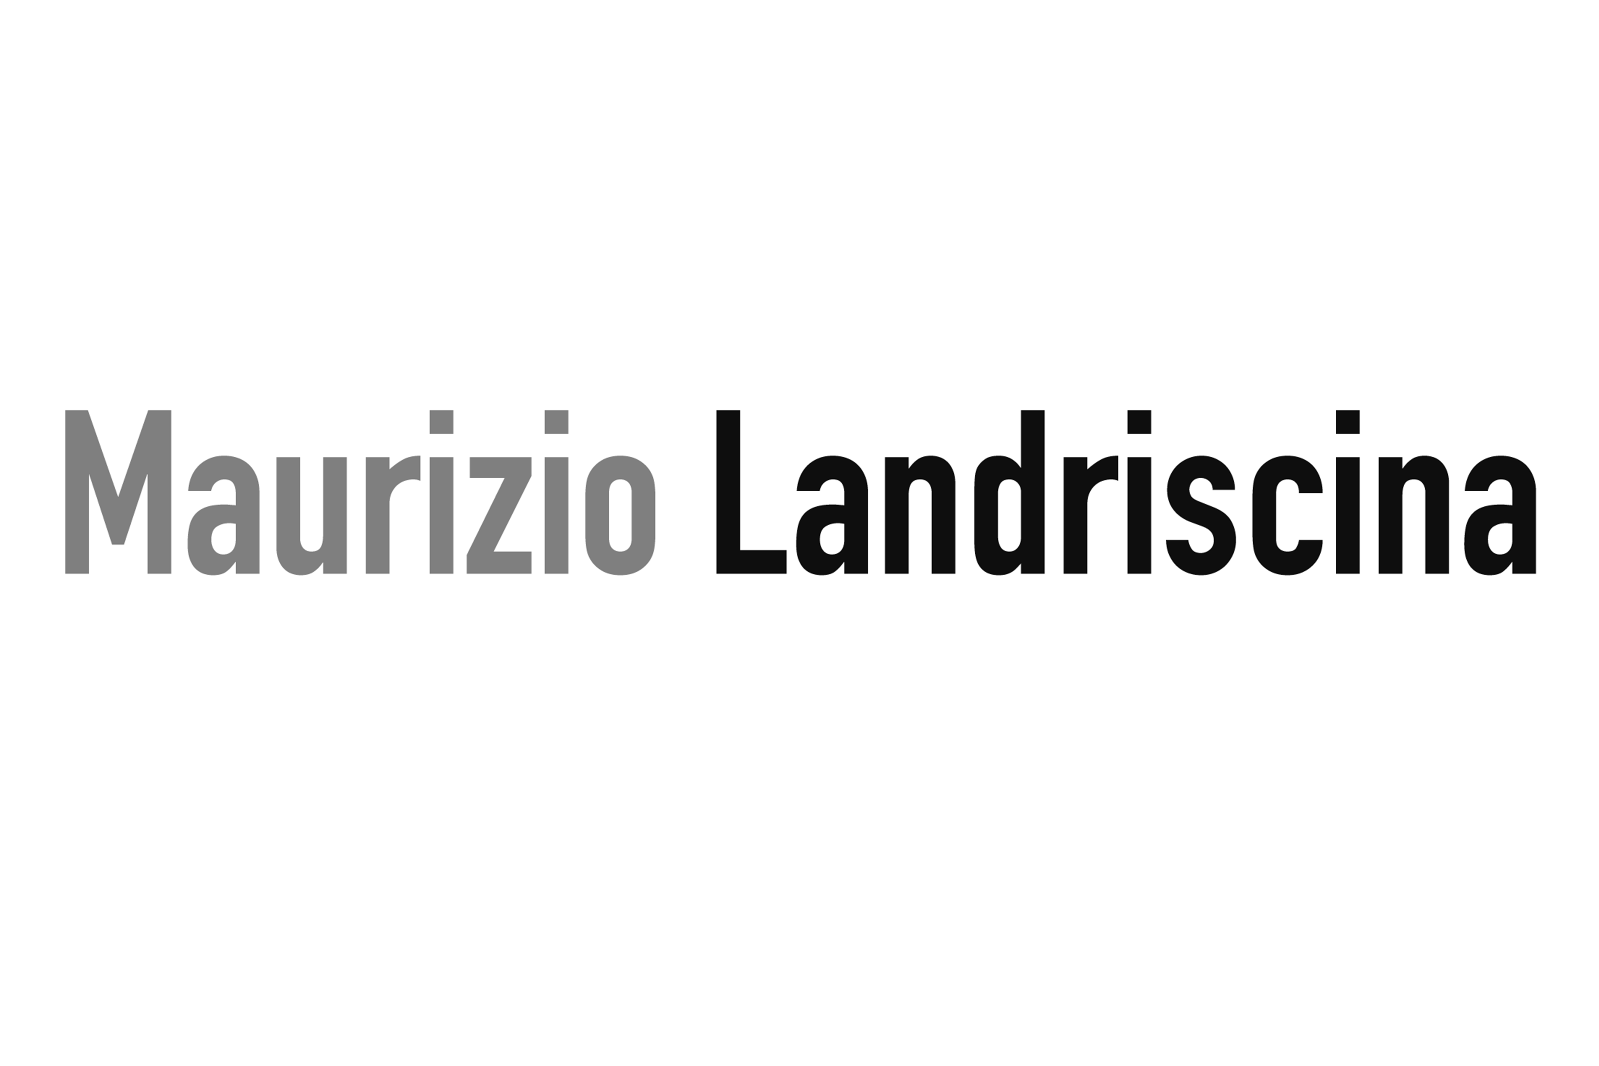 Maurizio Landriscina  photography